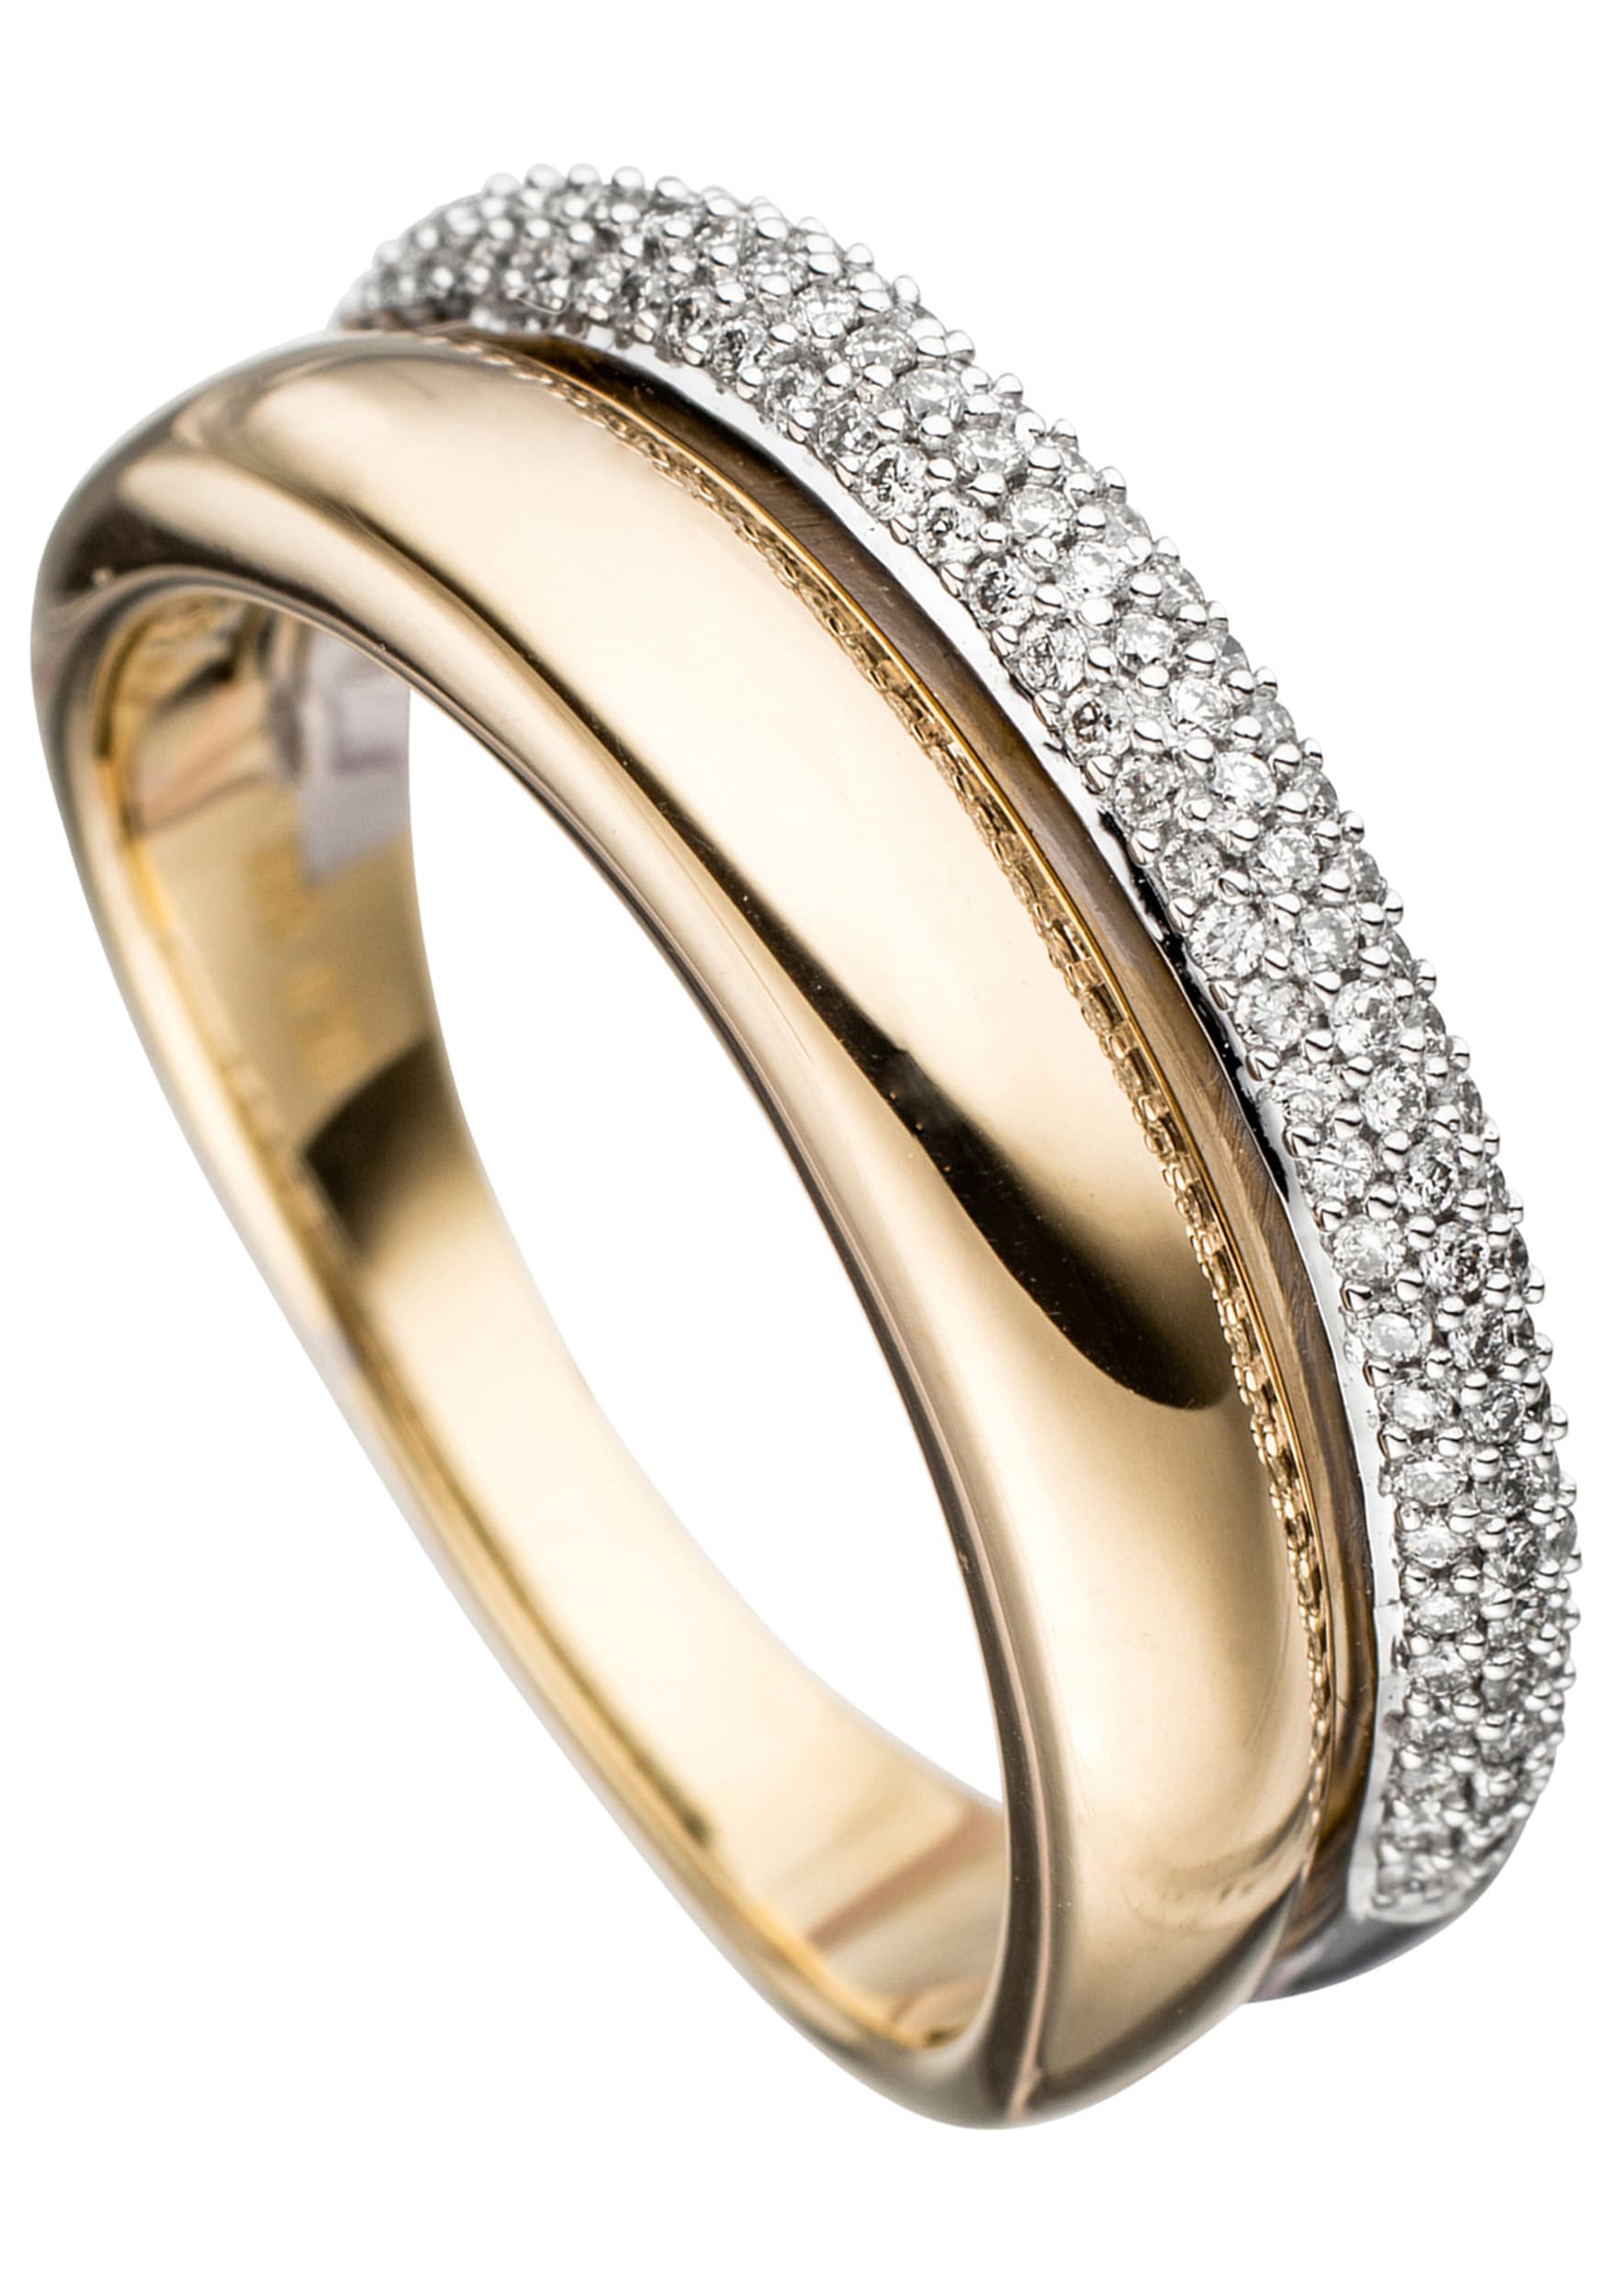 Diamantring Gold bicolor BAUR 585 »Ring mit | Diamanten«, 101 JOBO kaufen